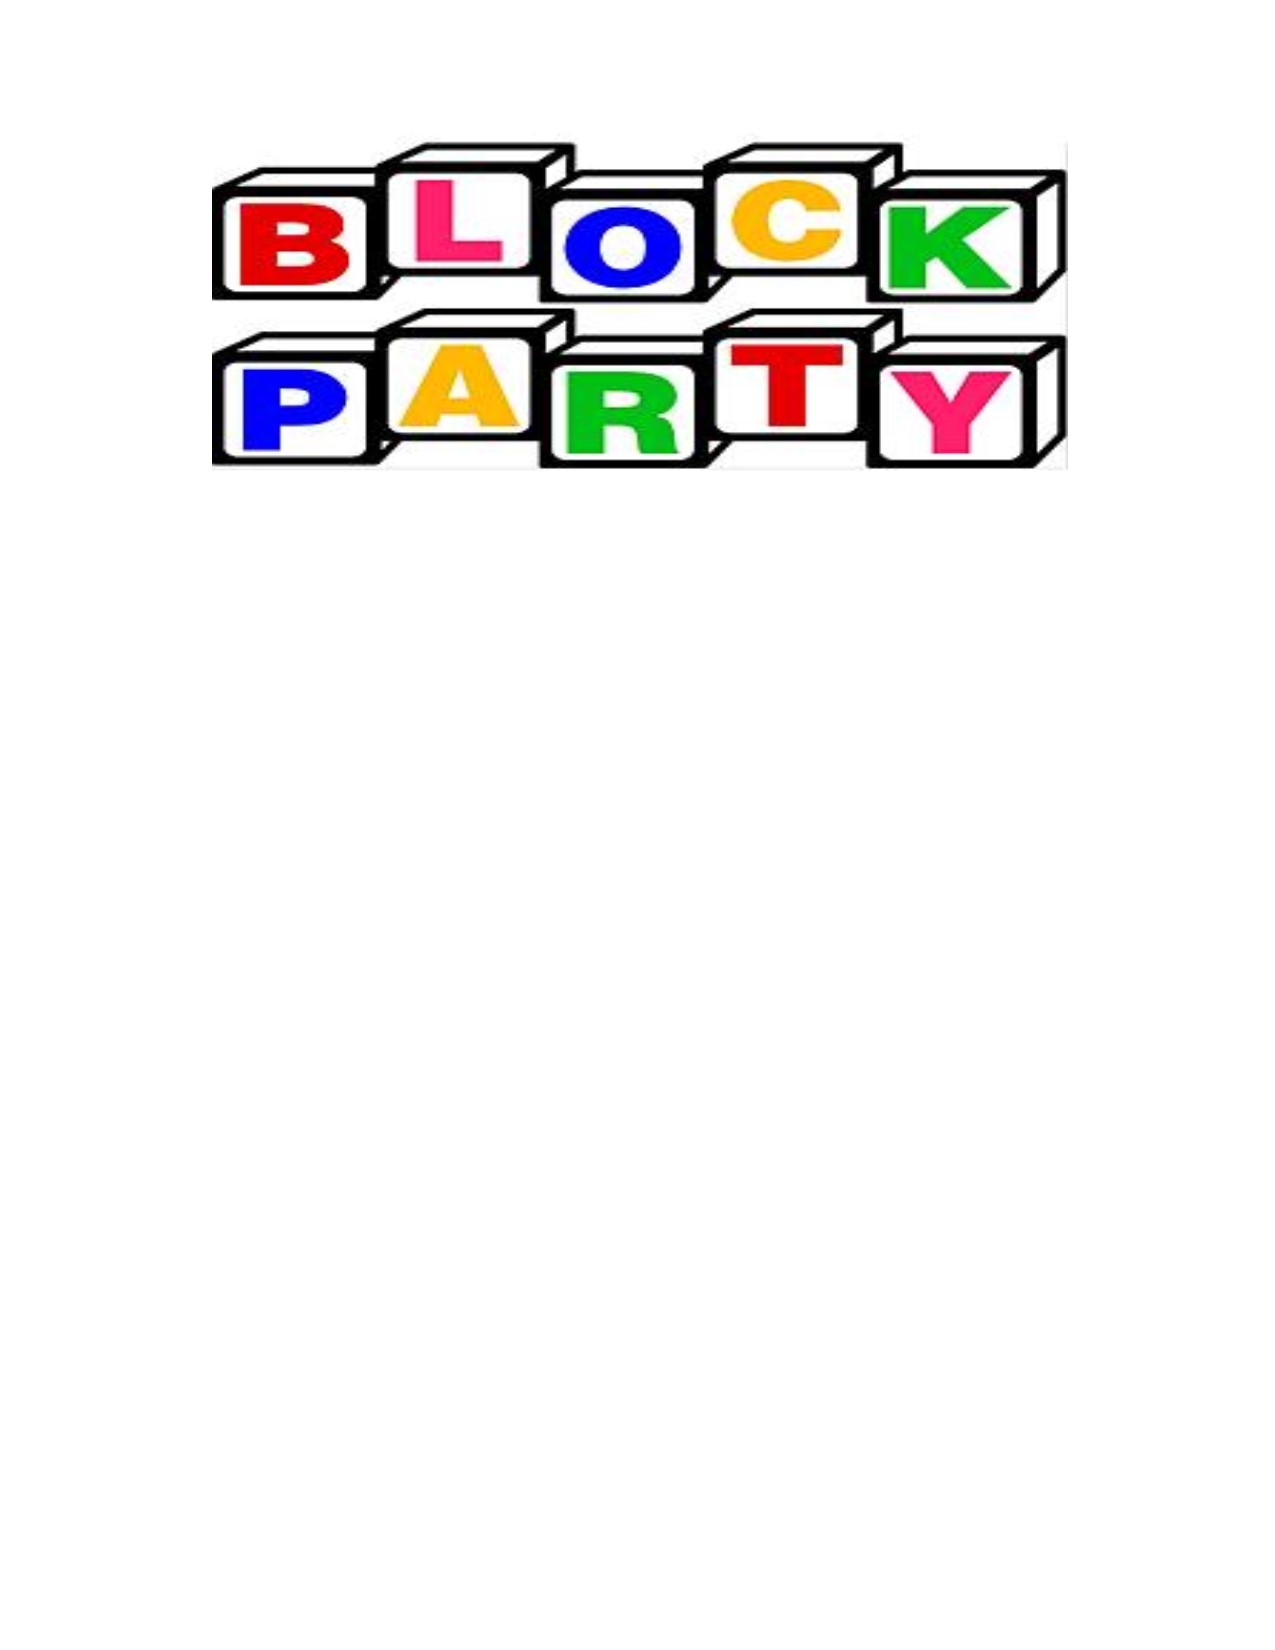 Block party